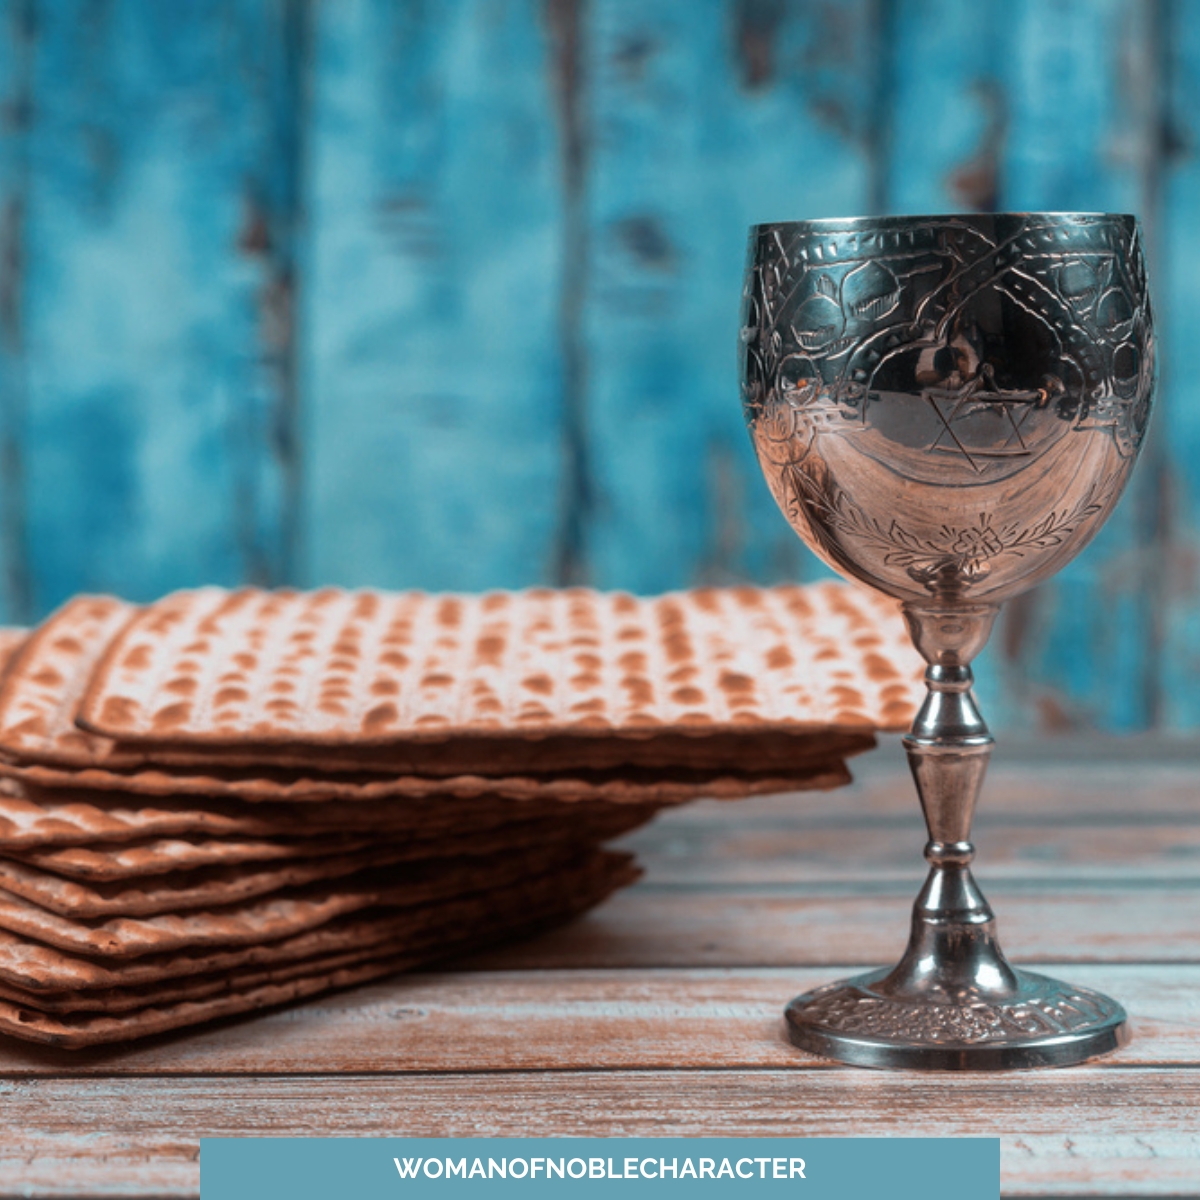 matzah bread for the post on unleavened bread